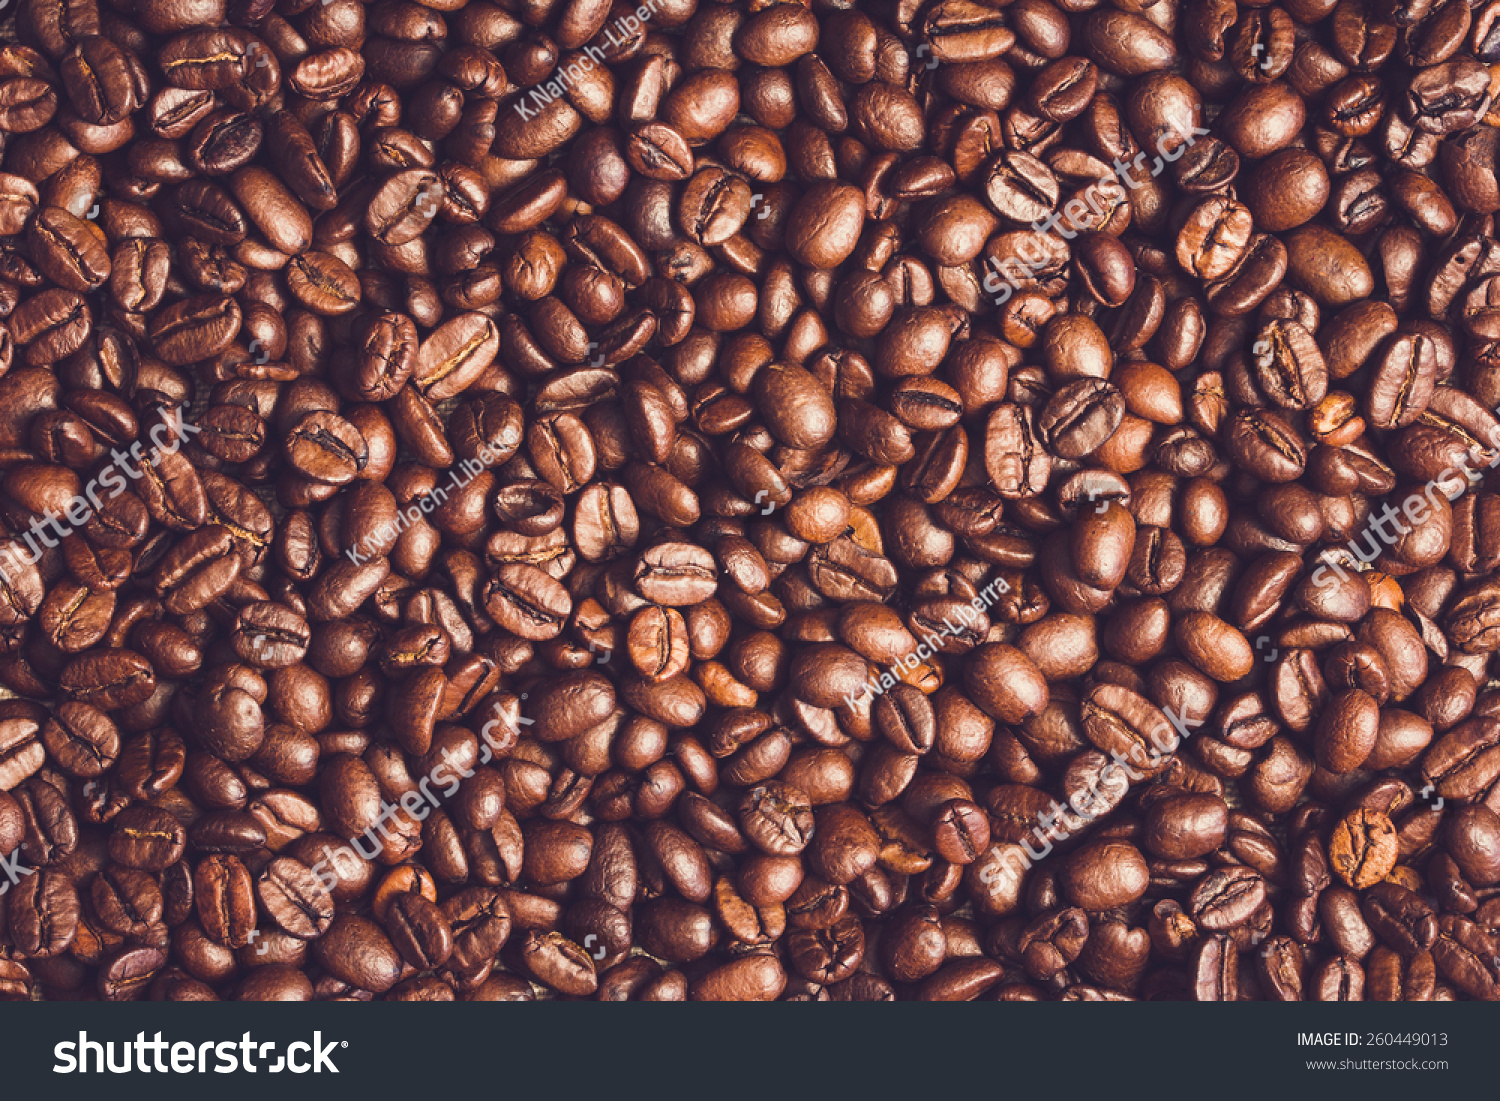 stock market coffee beans